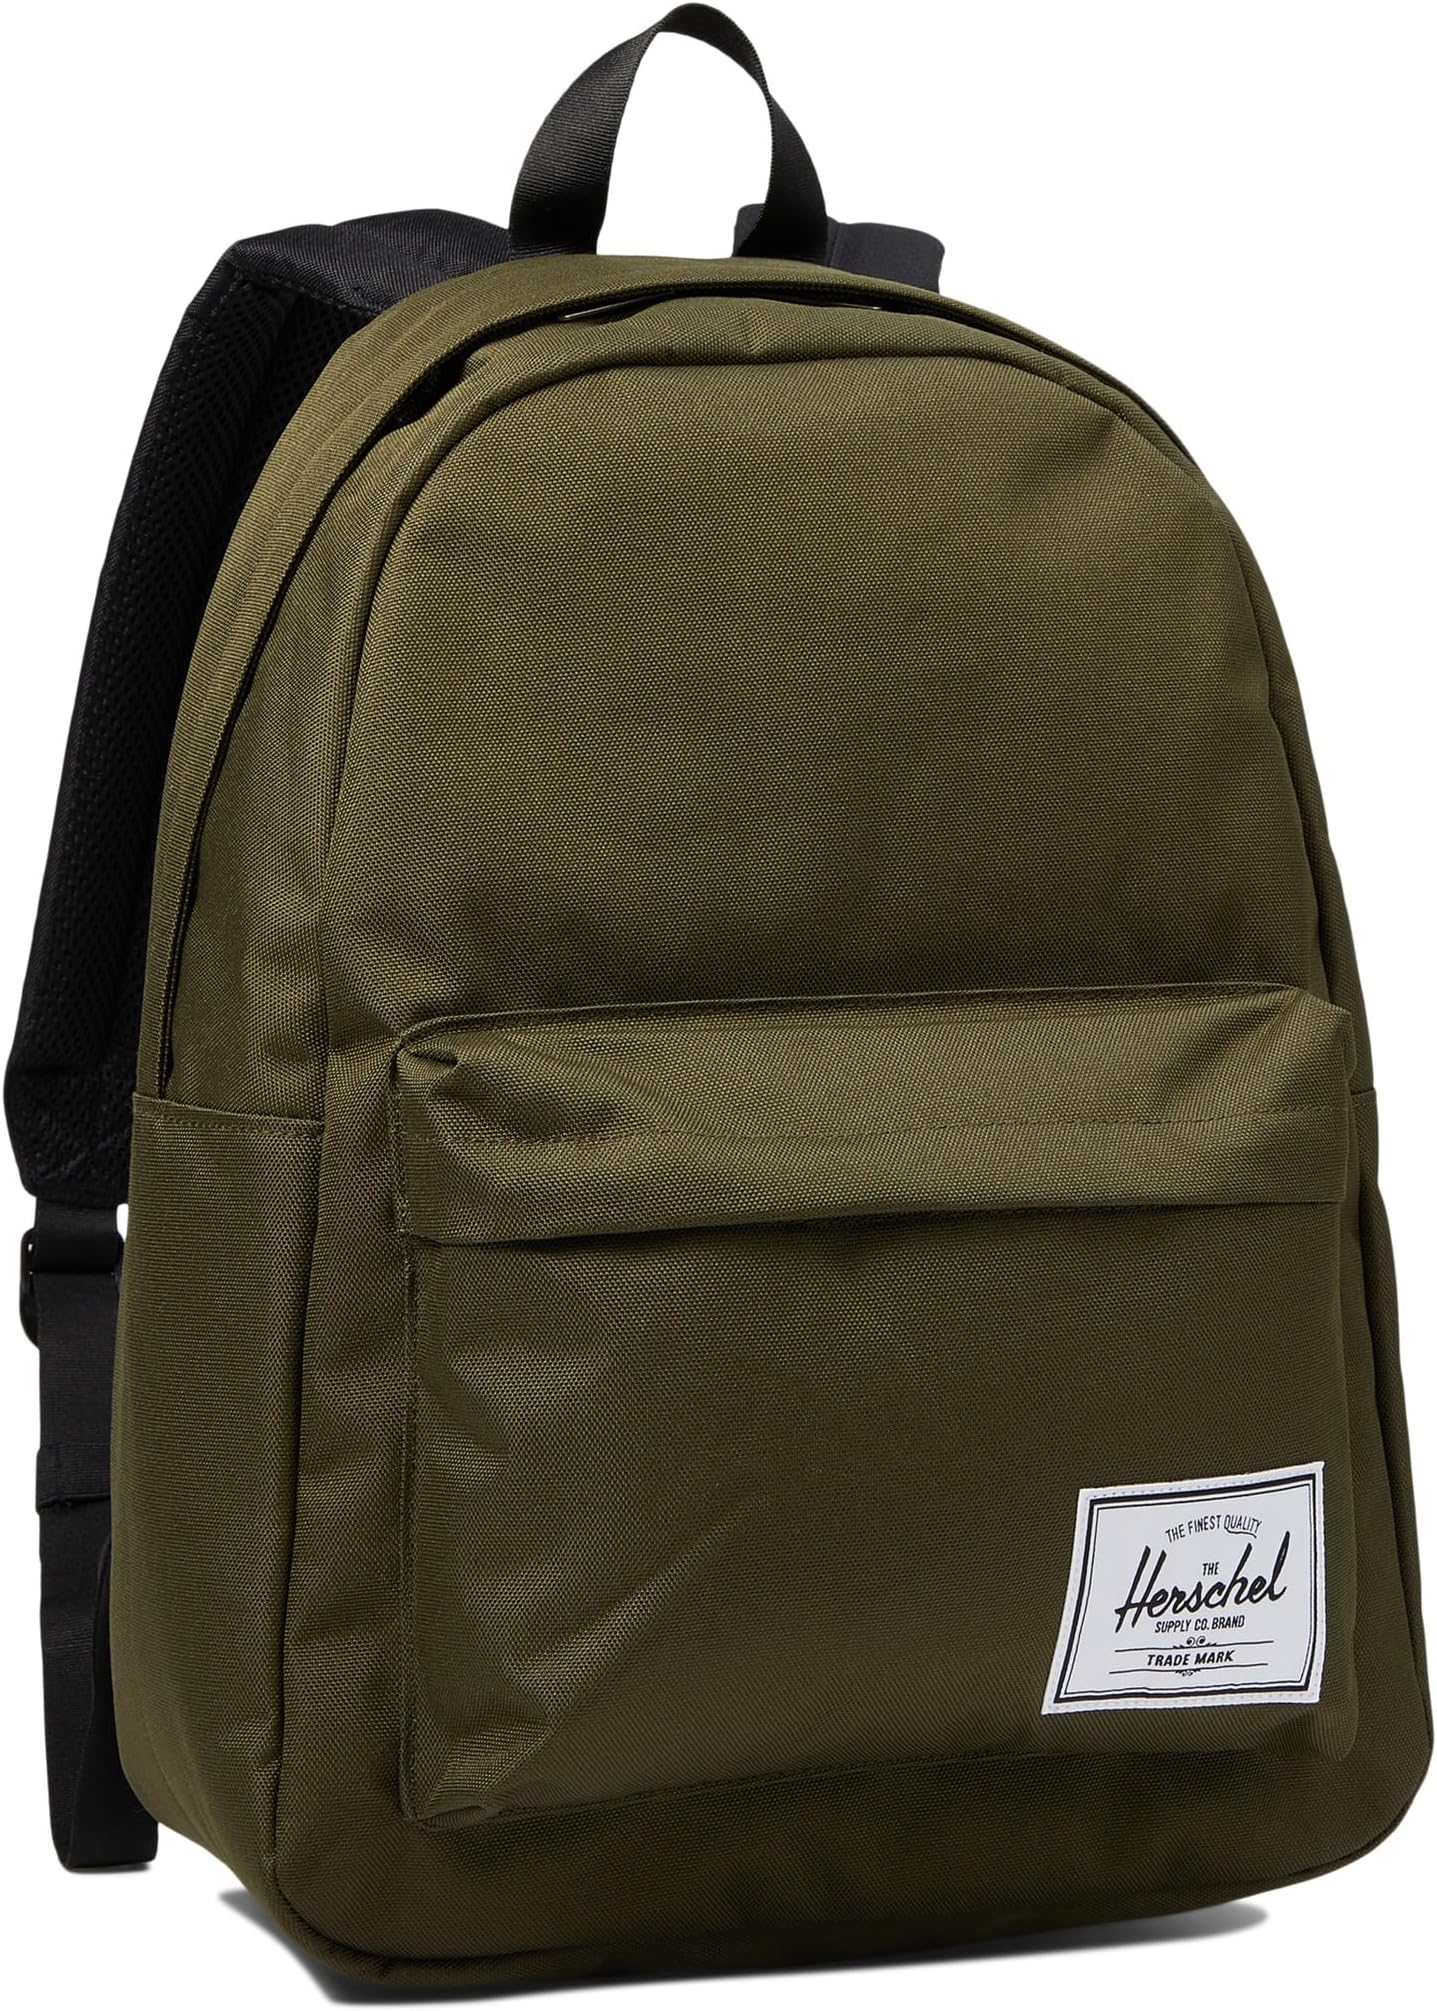 рюкзак classic x large herschel supply co цвет ivy green Рюкзак Classic Backpack Herschel Supply Co., цвет Ivy Green